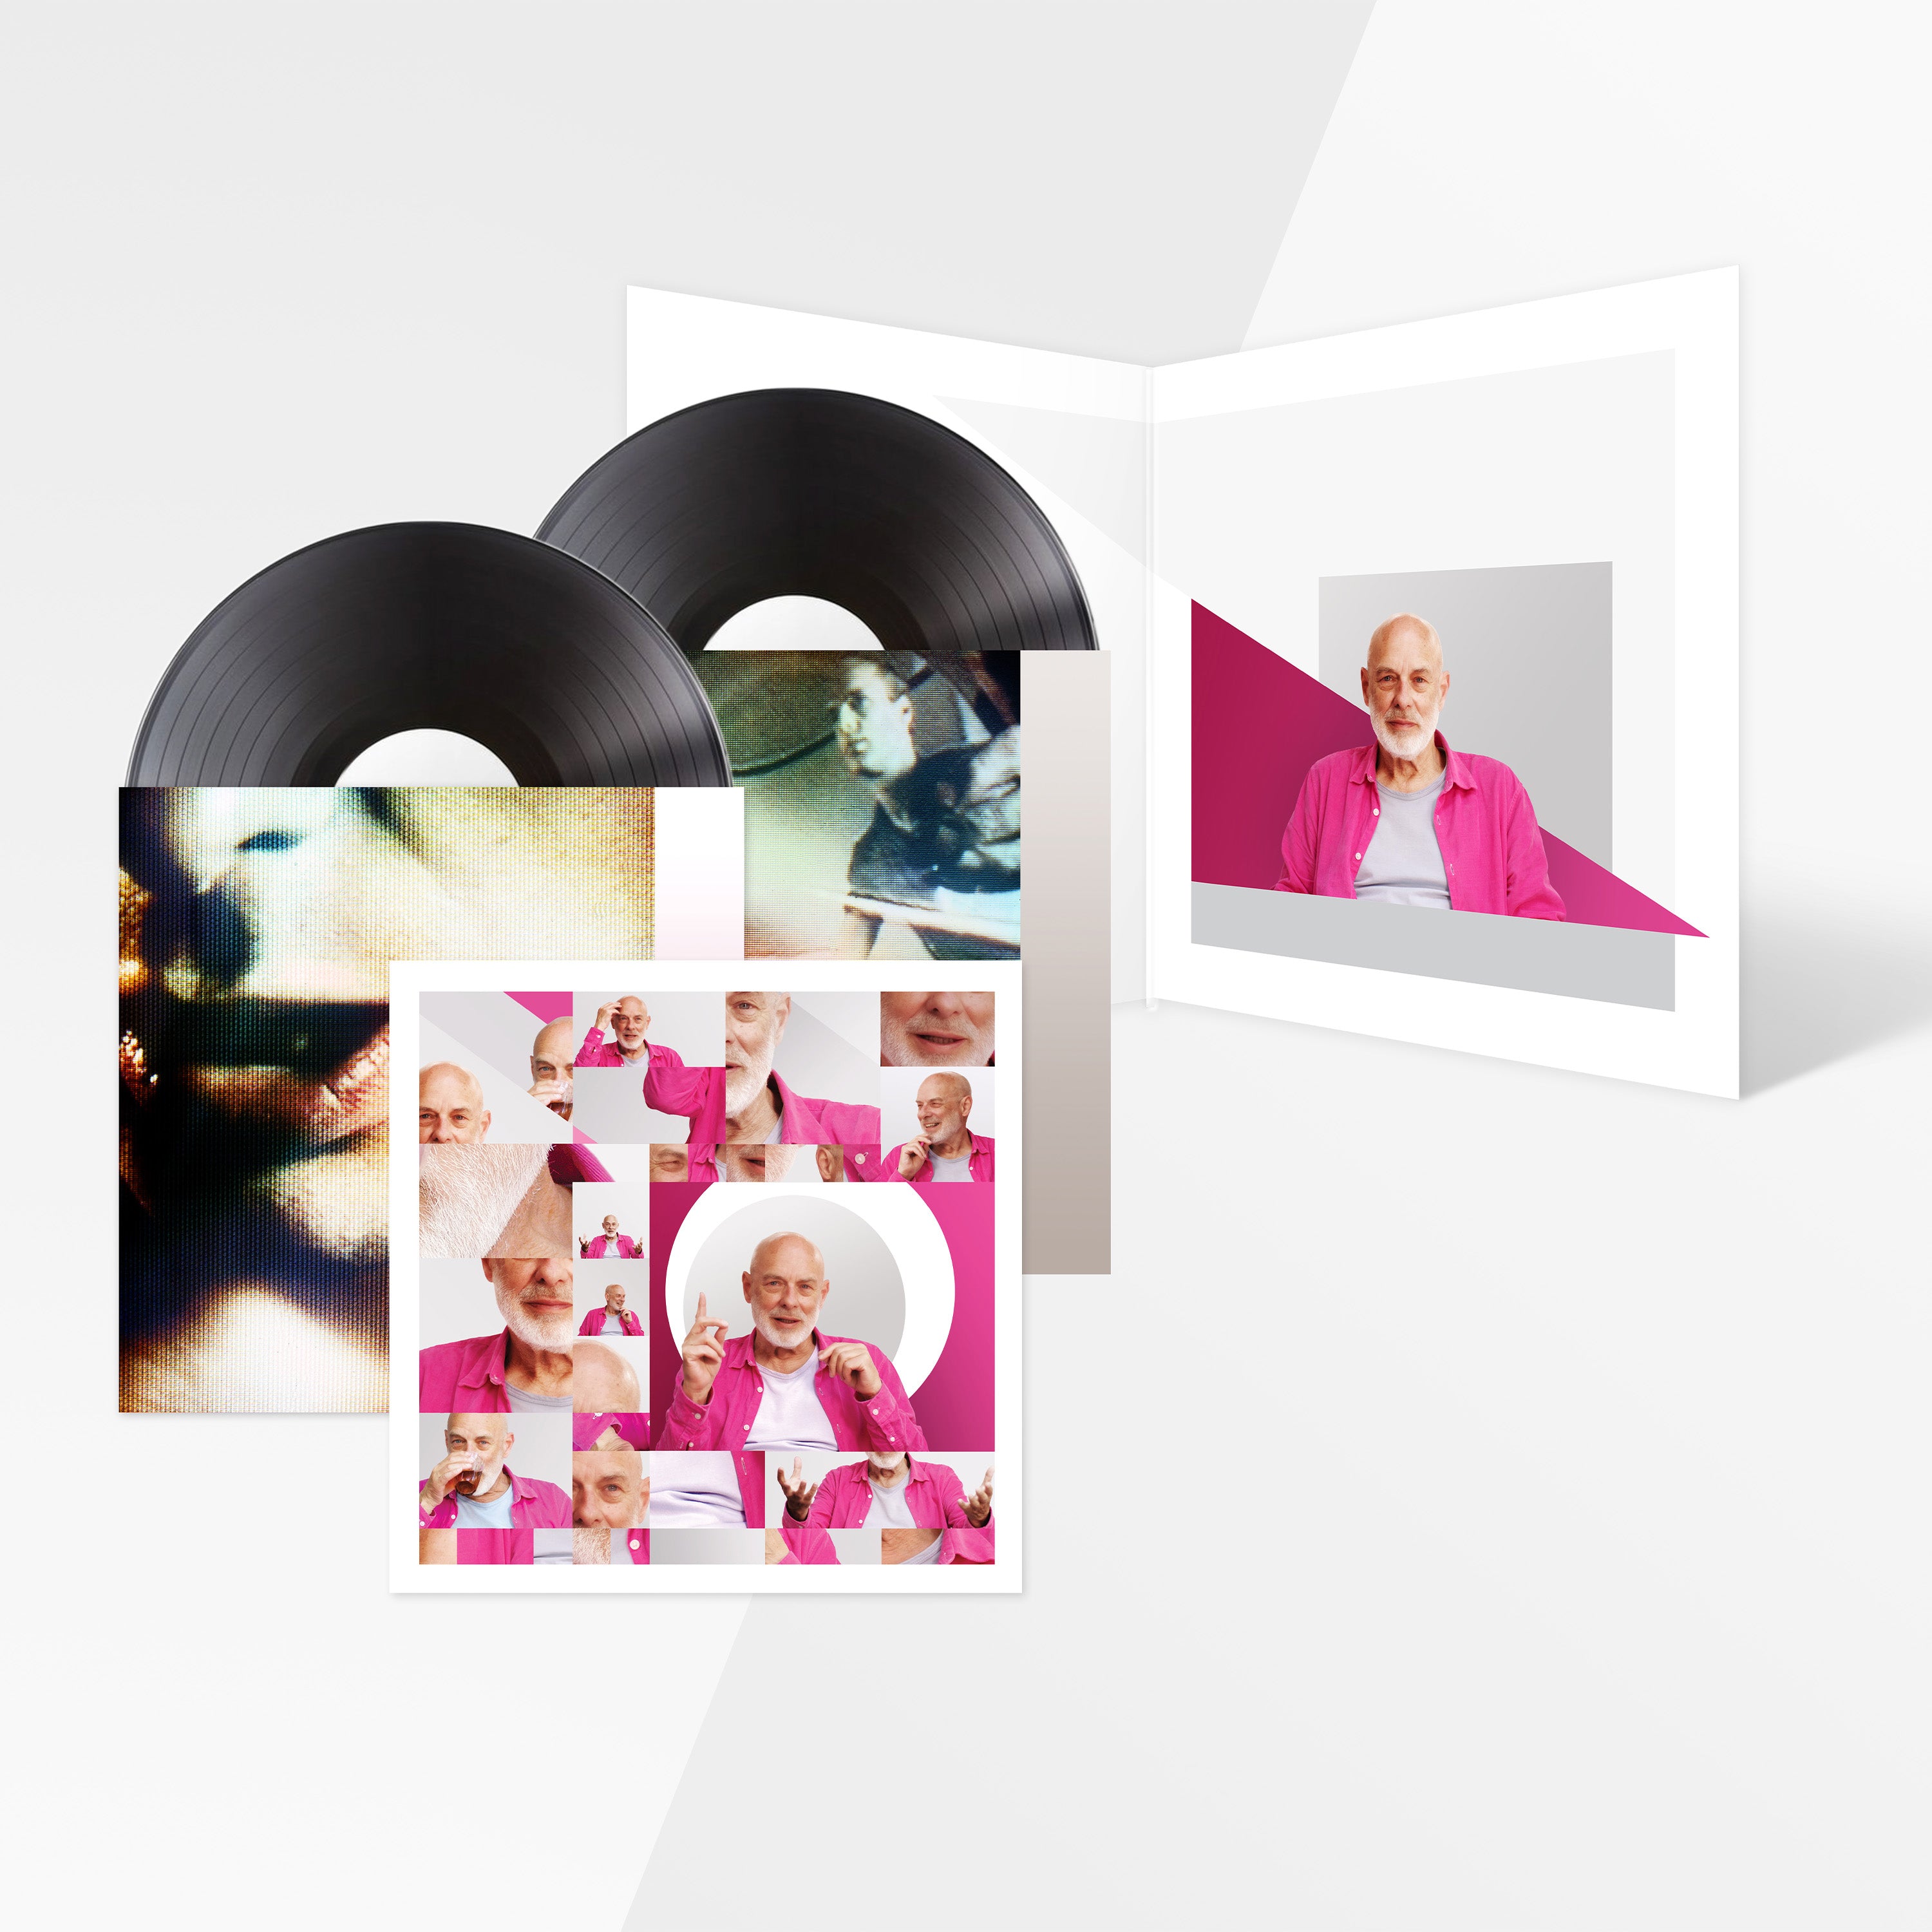 Brian Eno - Eno (Original Motion Picture Soundtrack): Recycled Black Vinyl 2LP